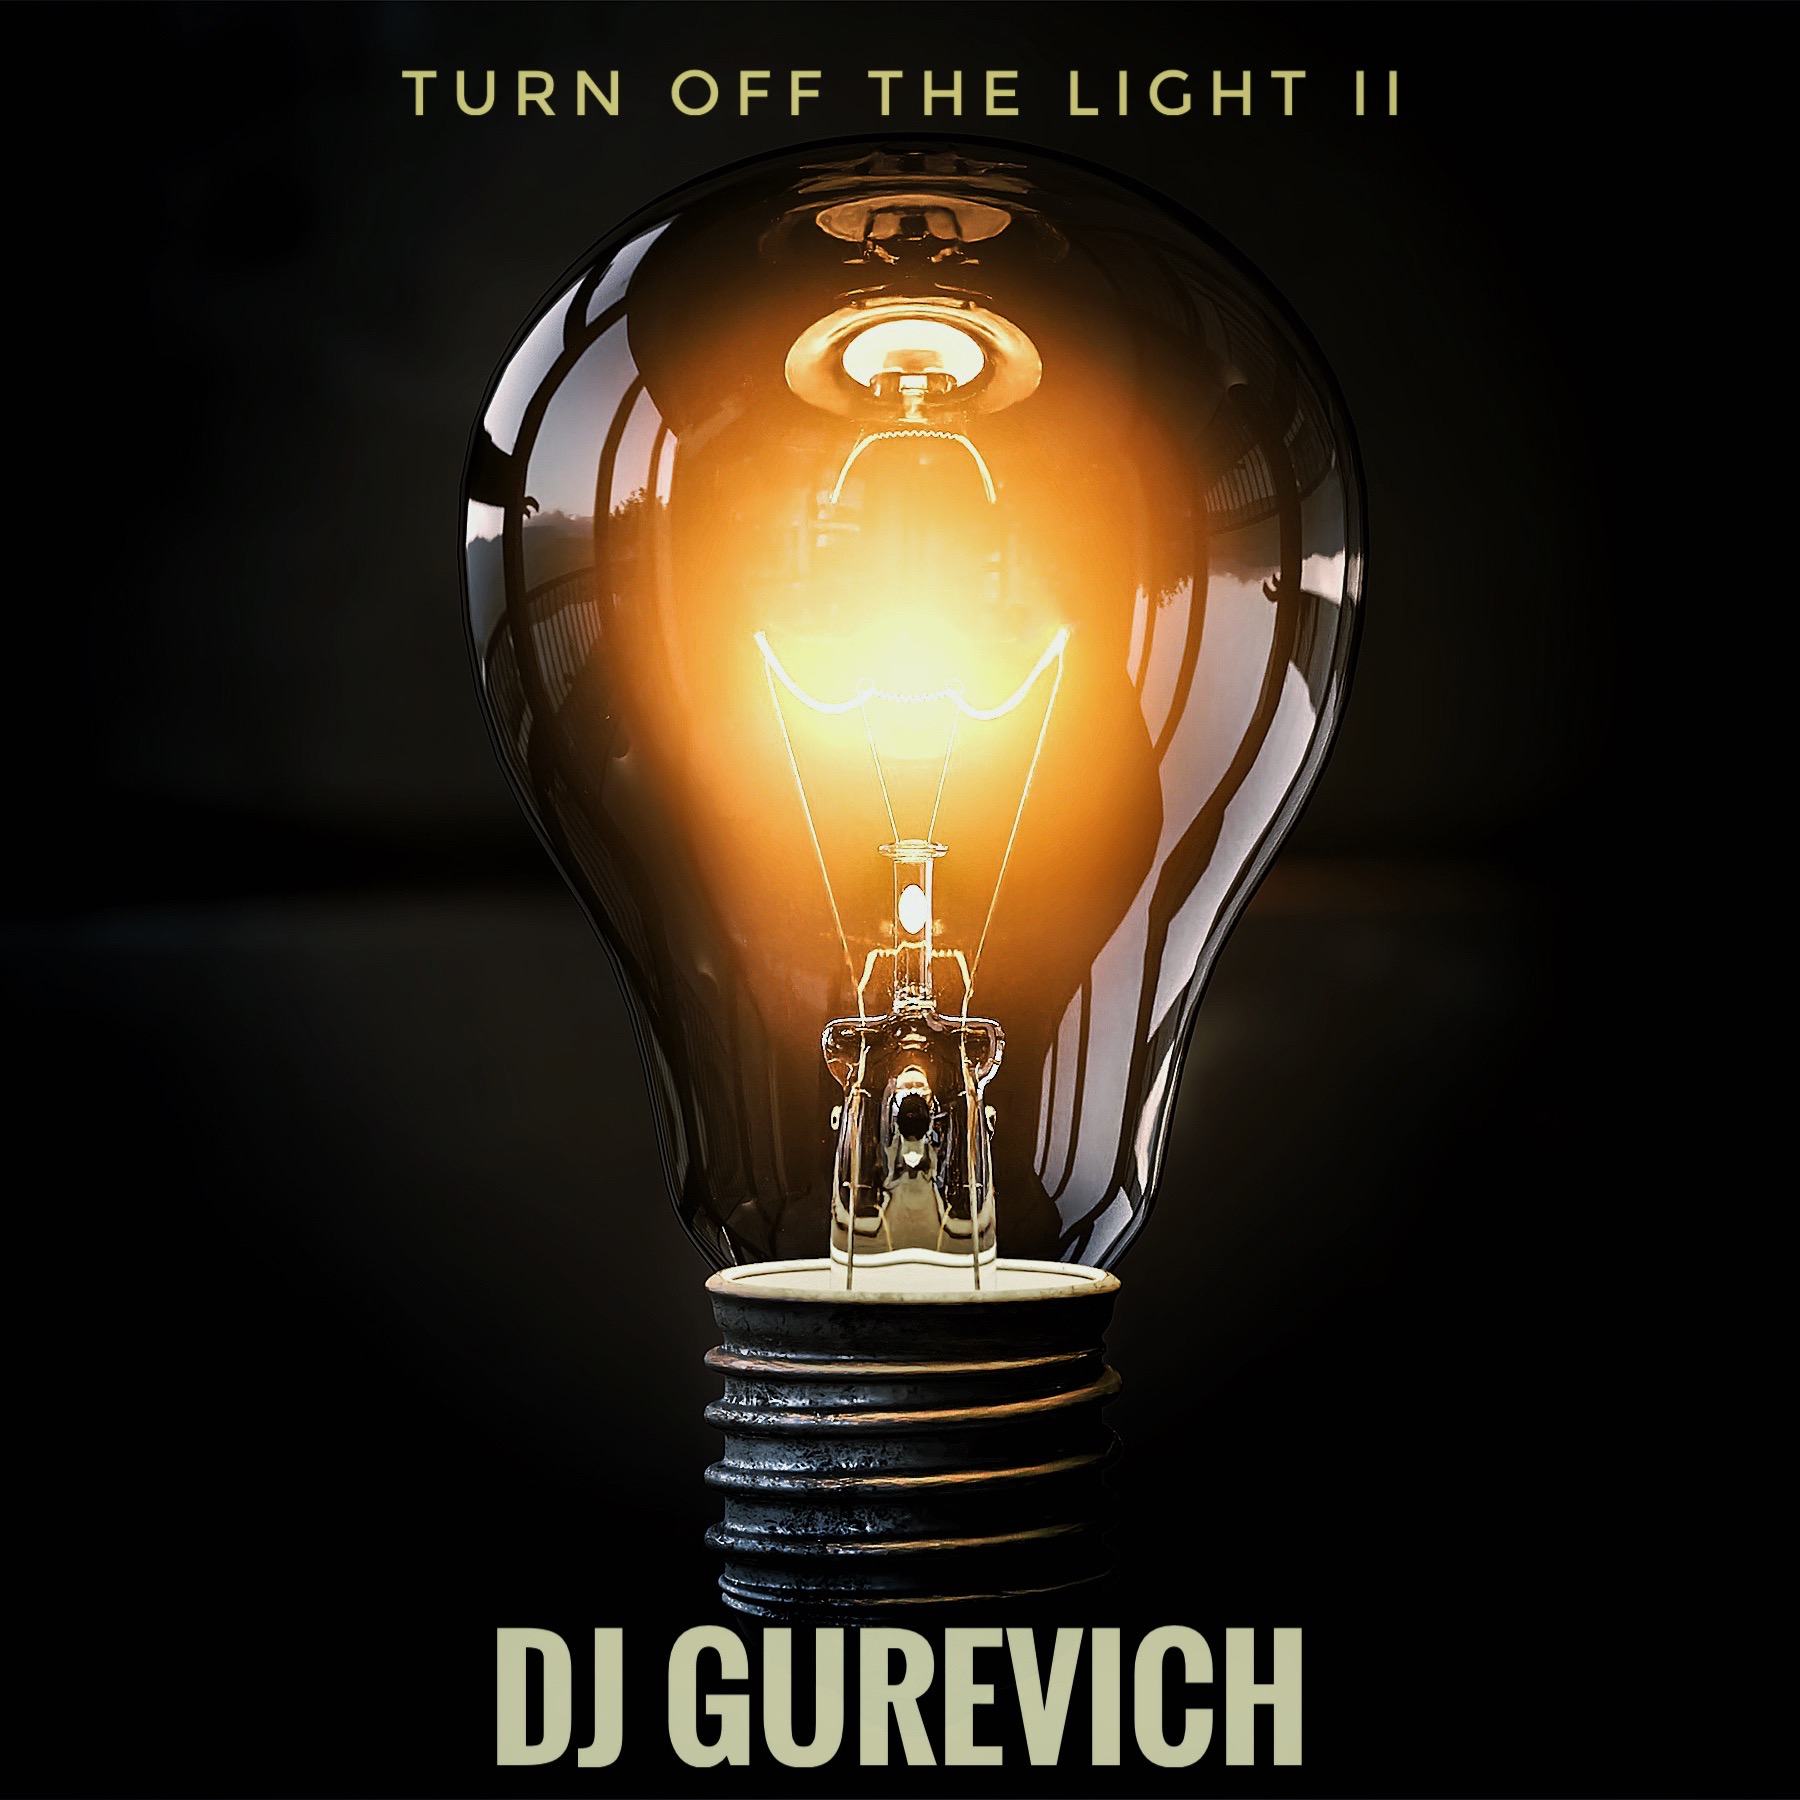 Lae alla Dj Gurevich - Turn off light II